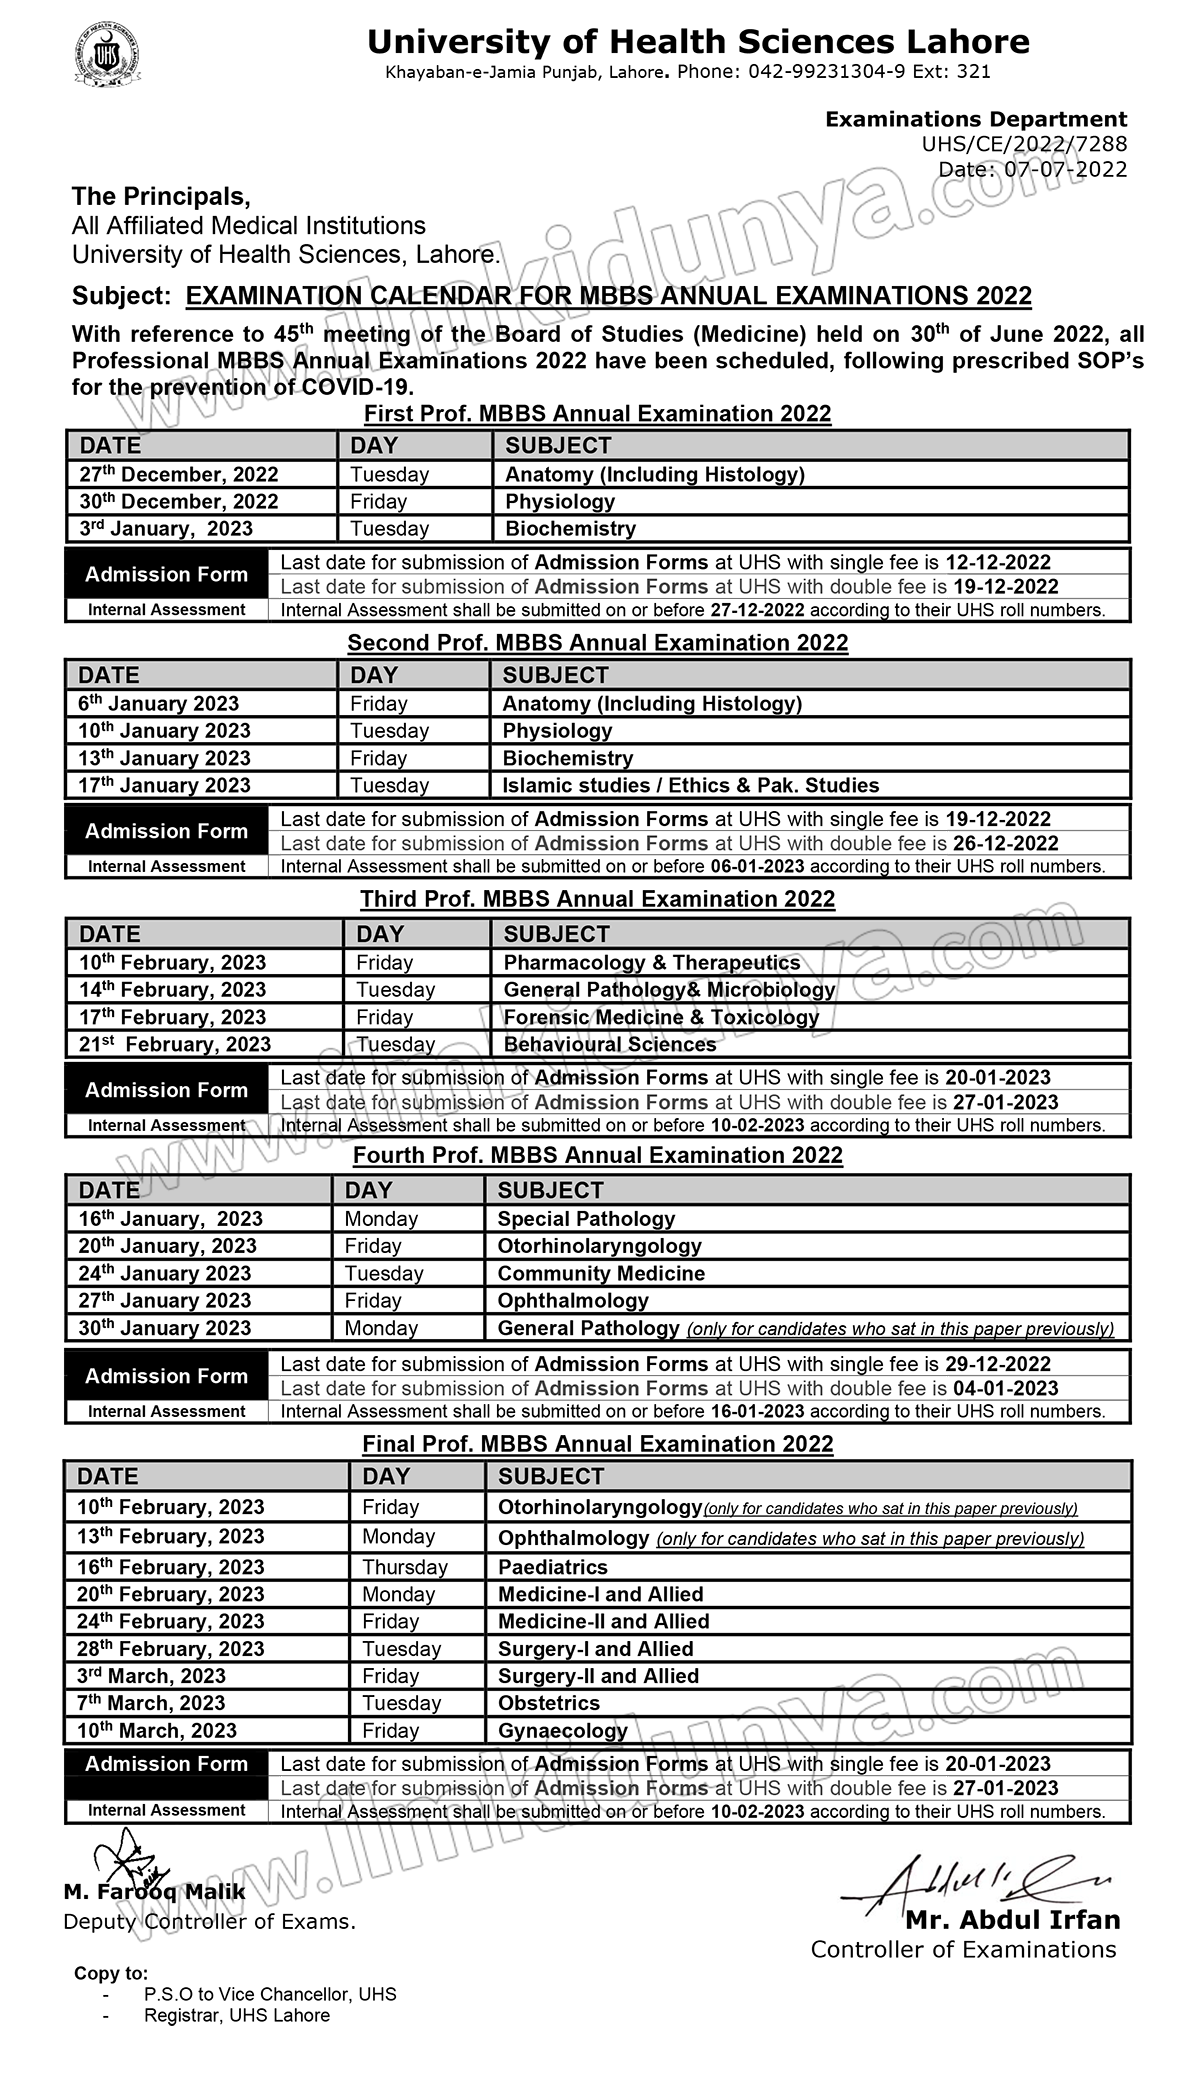 UHS Examination Calendar For MBBS Annual Examinations 2022